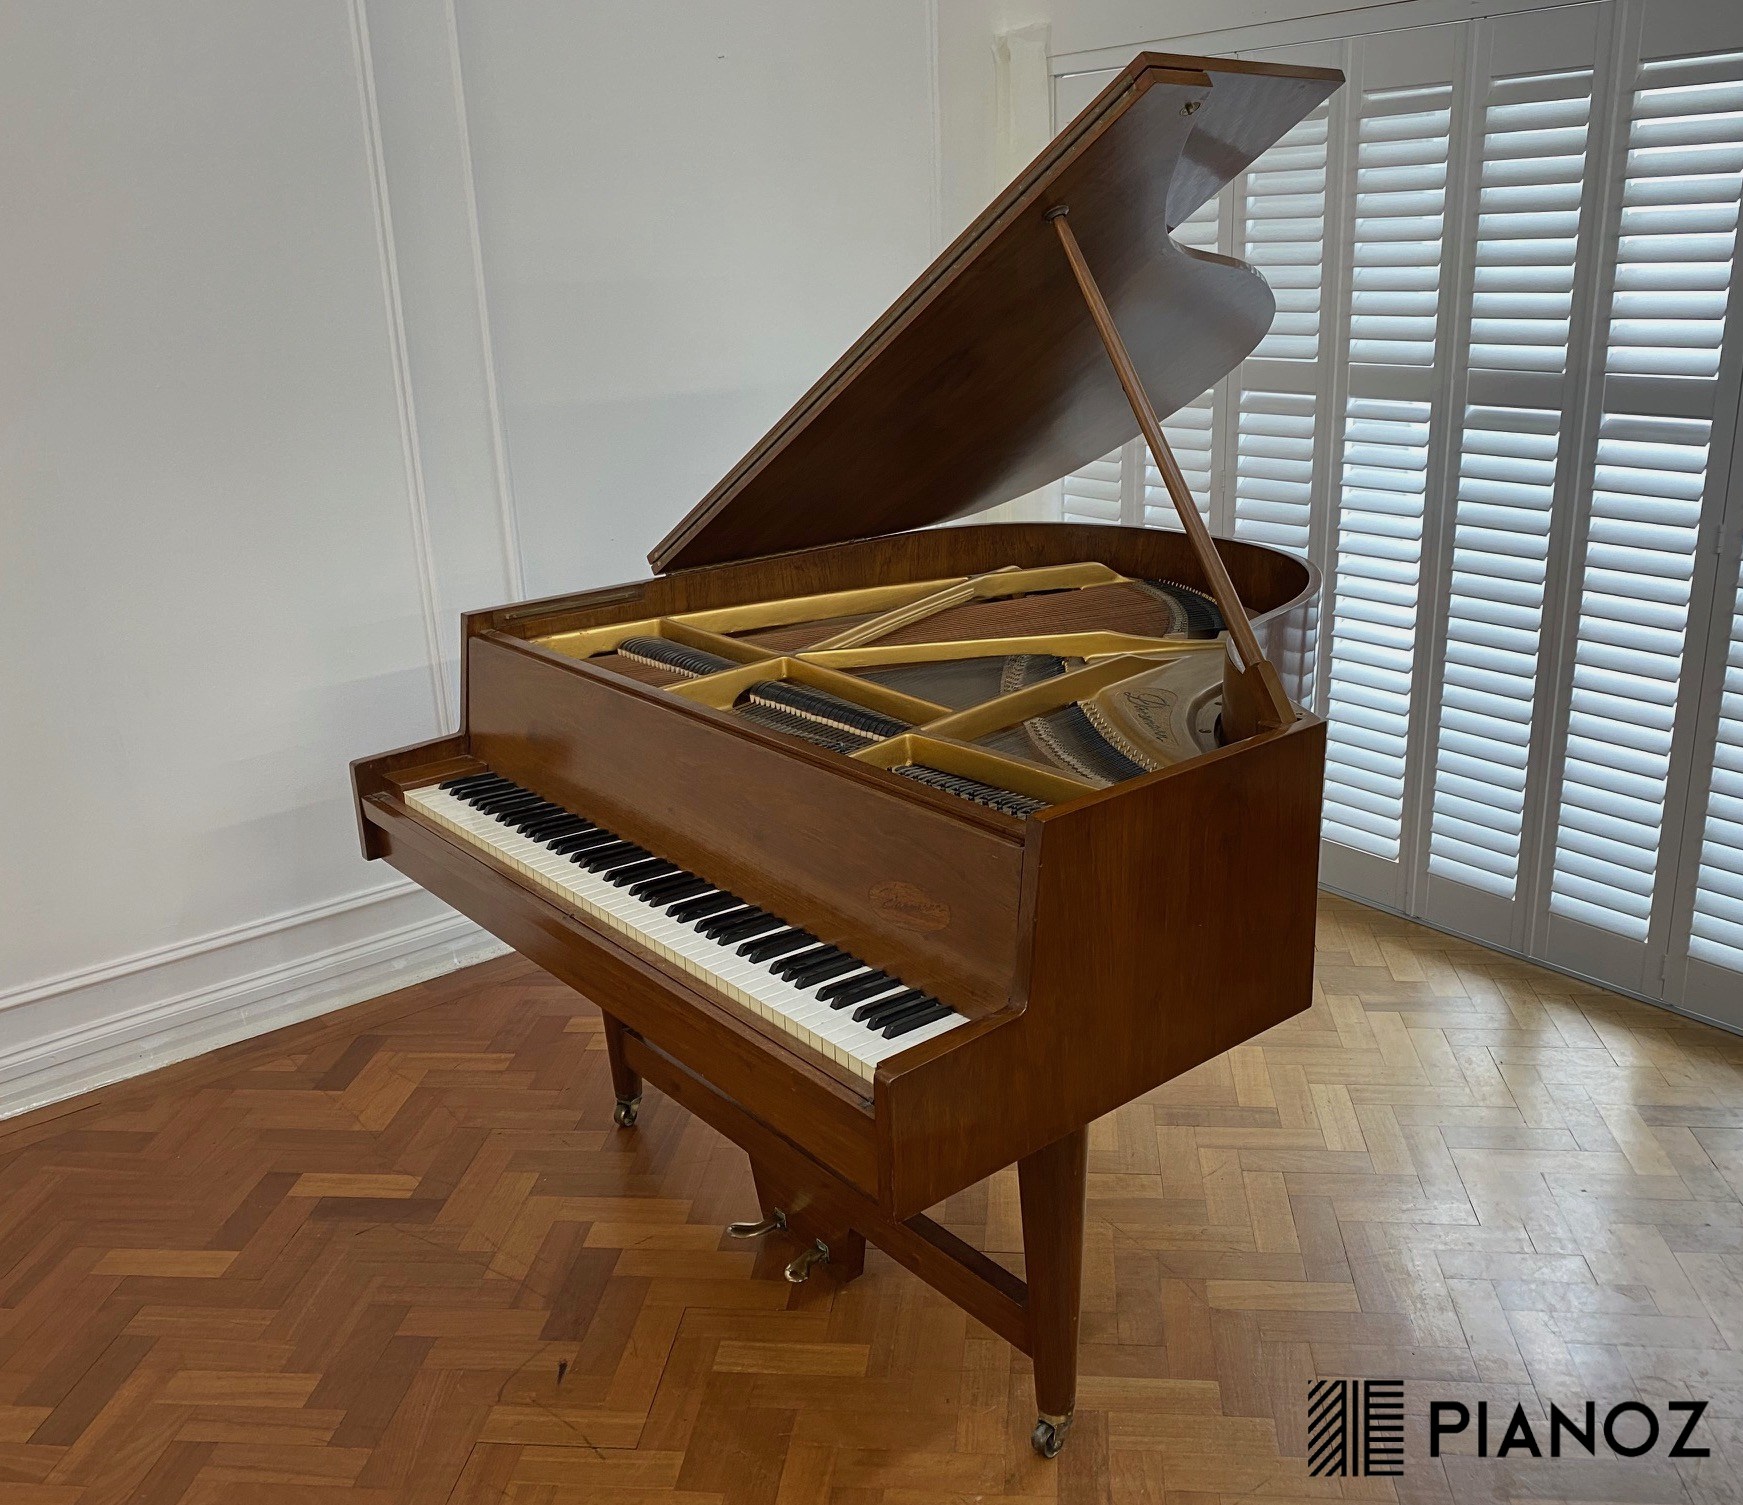 Danemann 1970s Baby Grand Piano piano for sale in UK